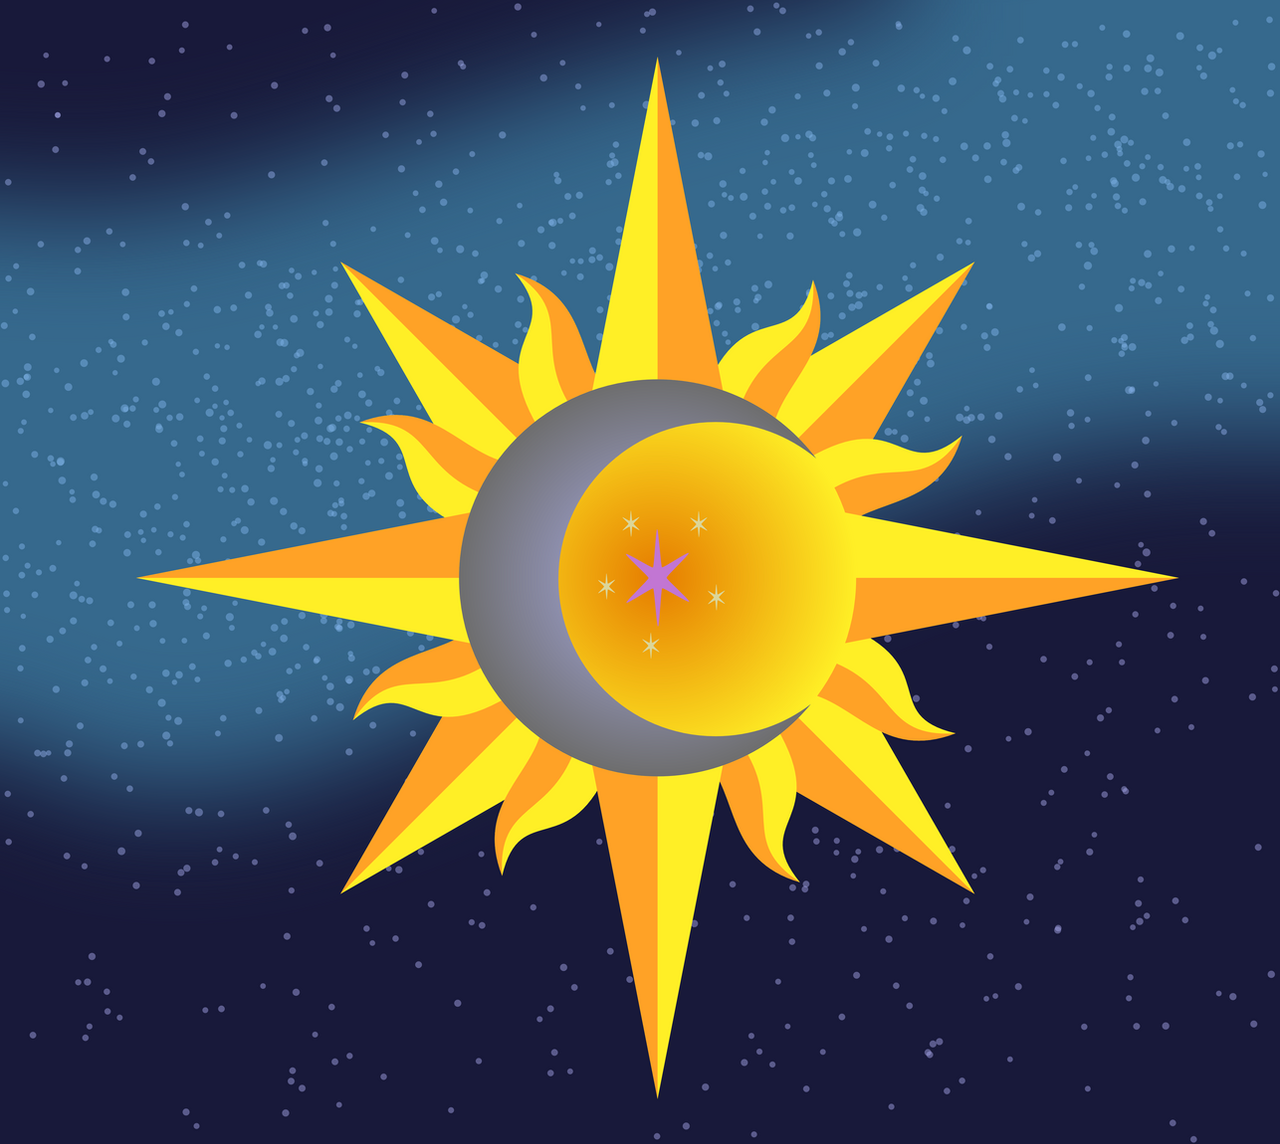 sun-moon-and-stars-by-the-intelligentleman-on-deviantart